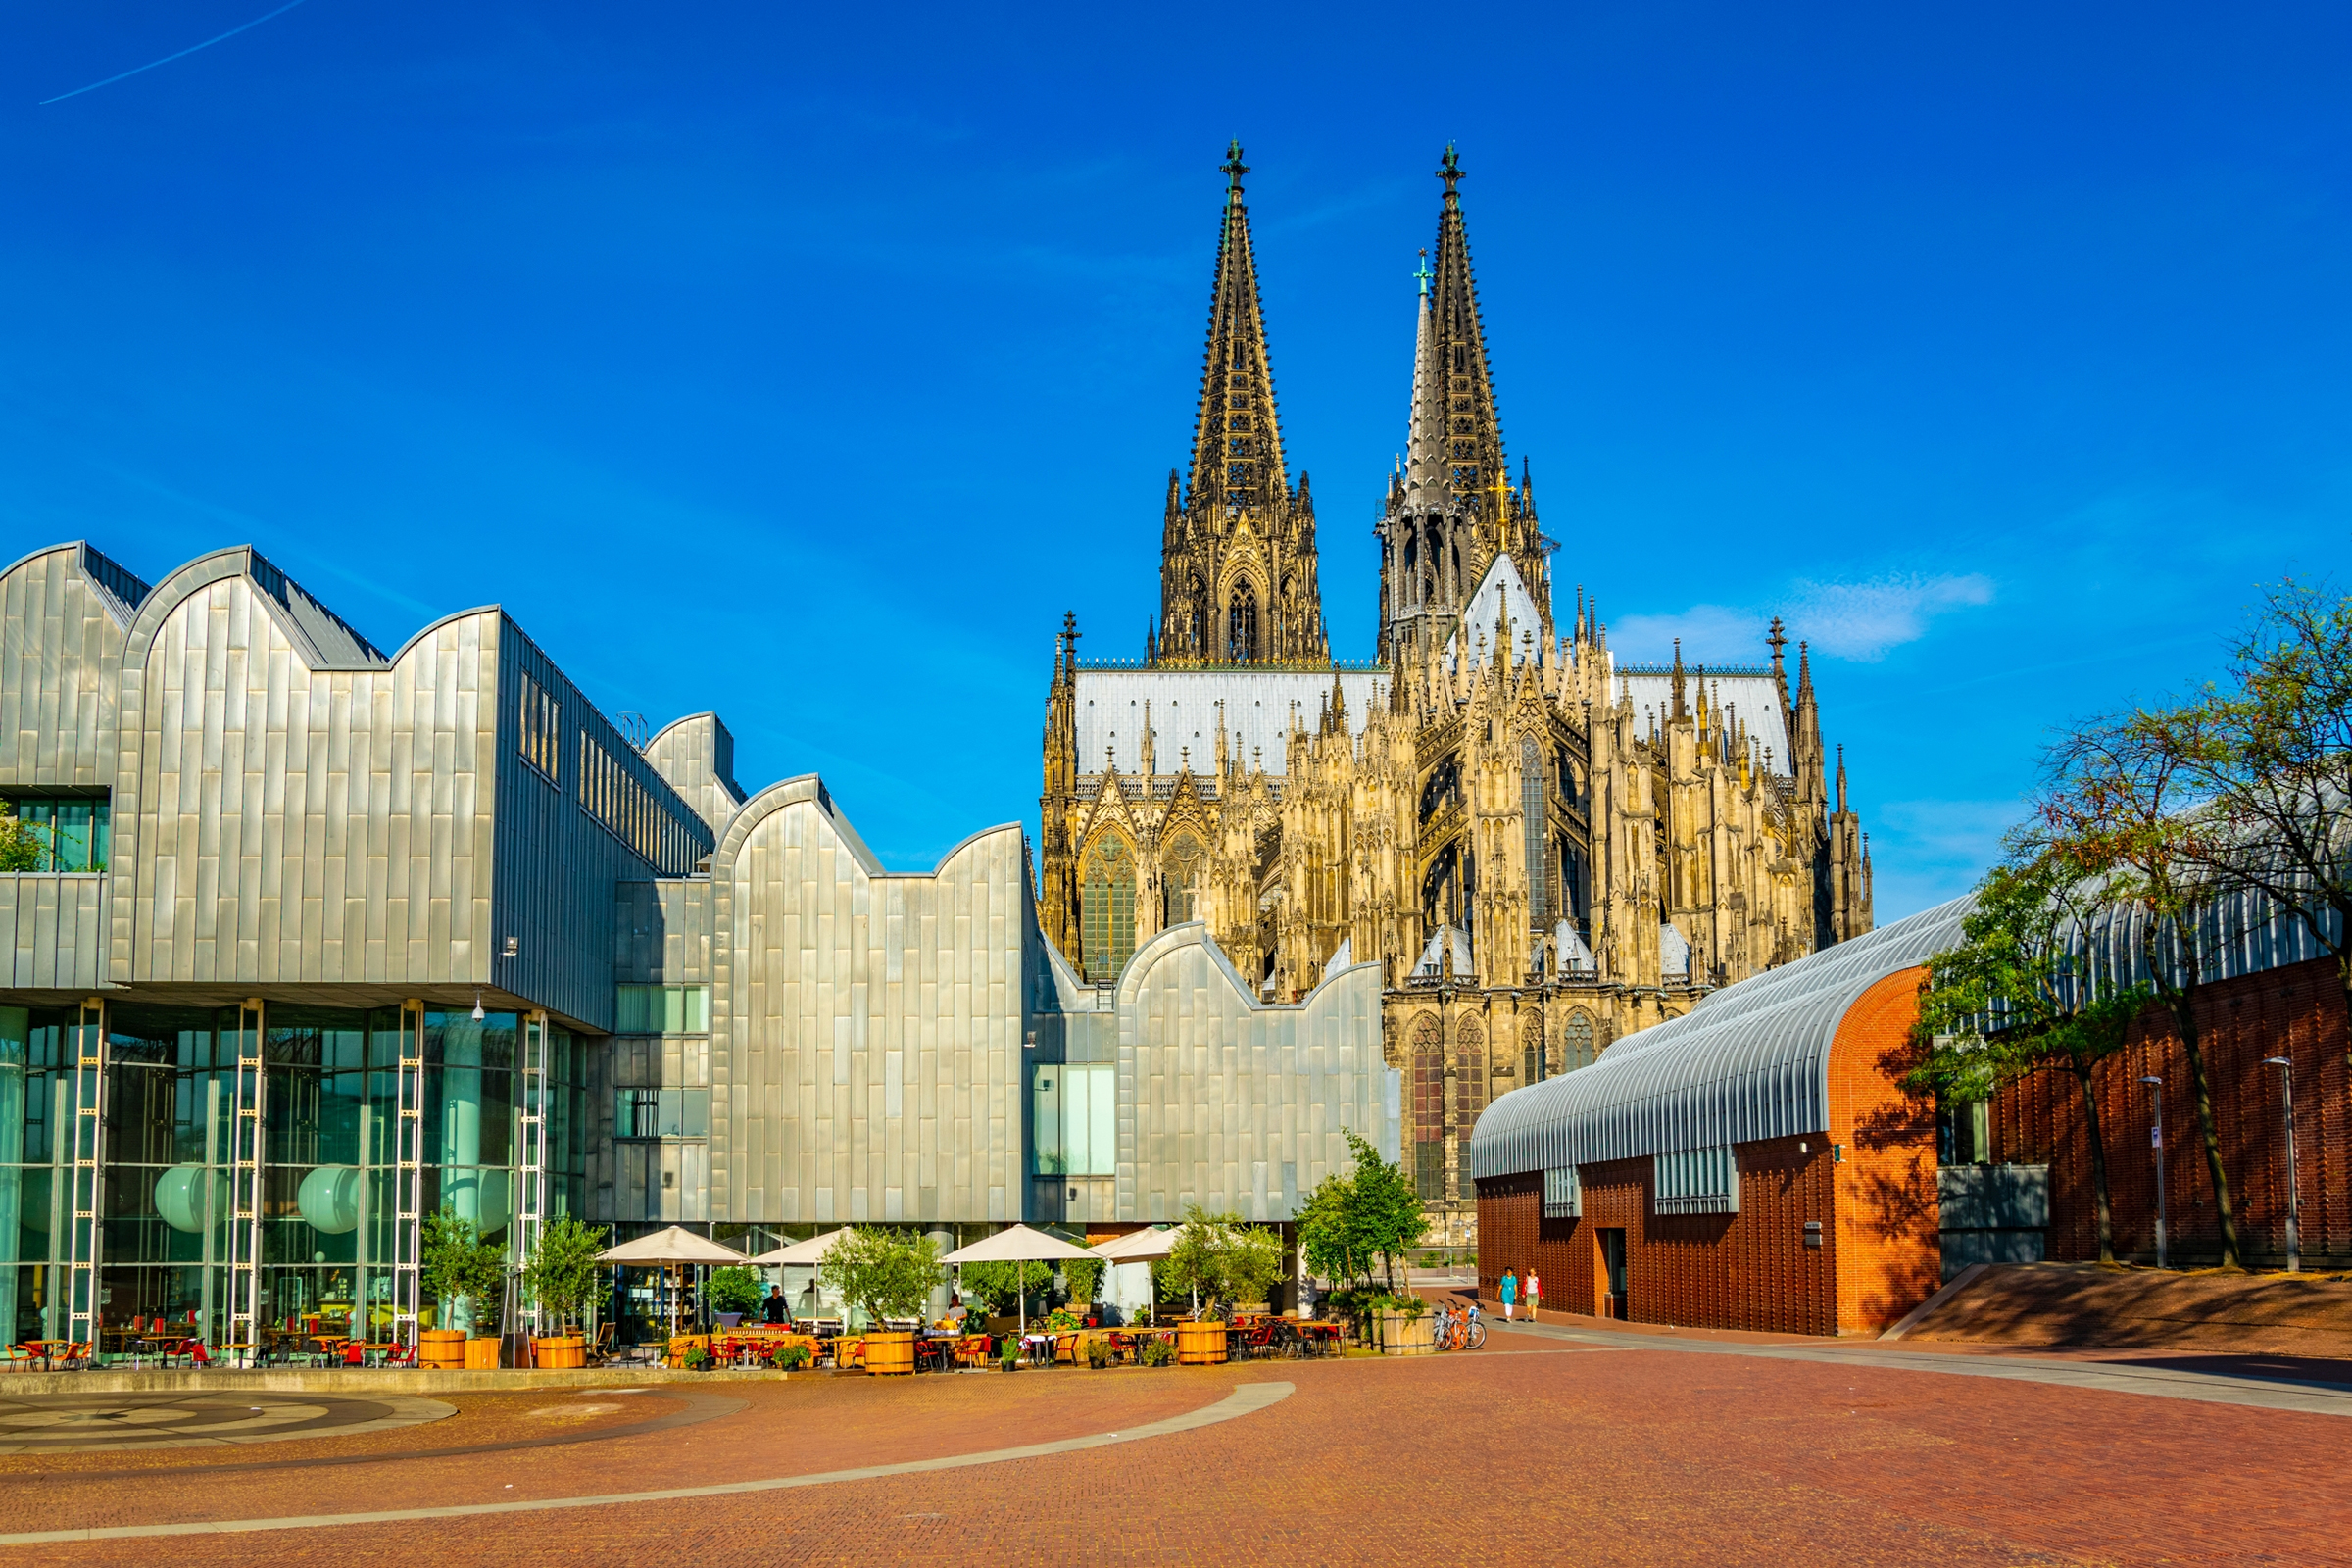 Symphonieorchester in Köln | H-Hotels.com